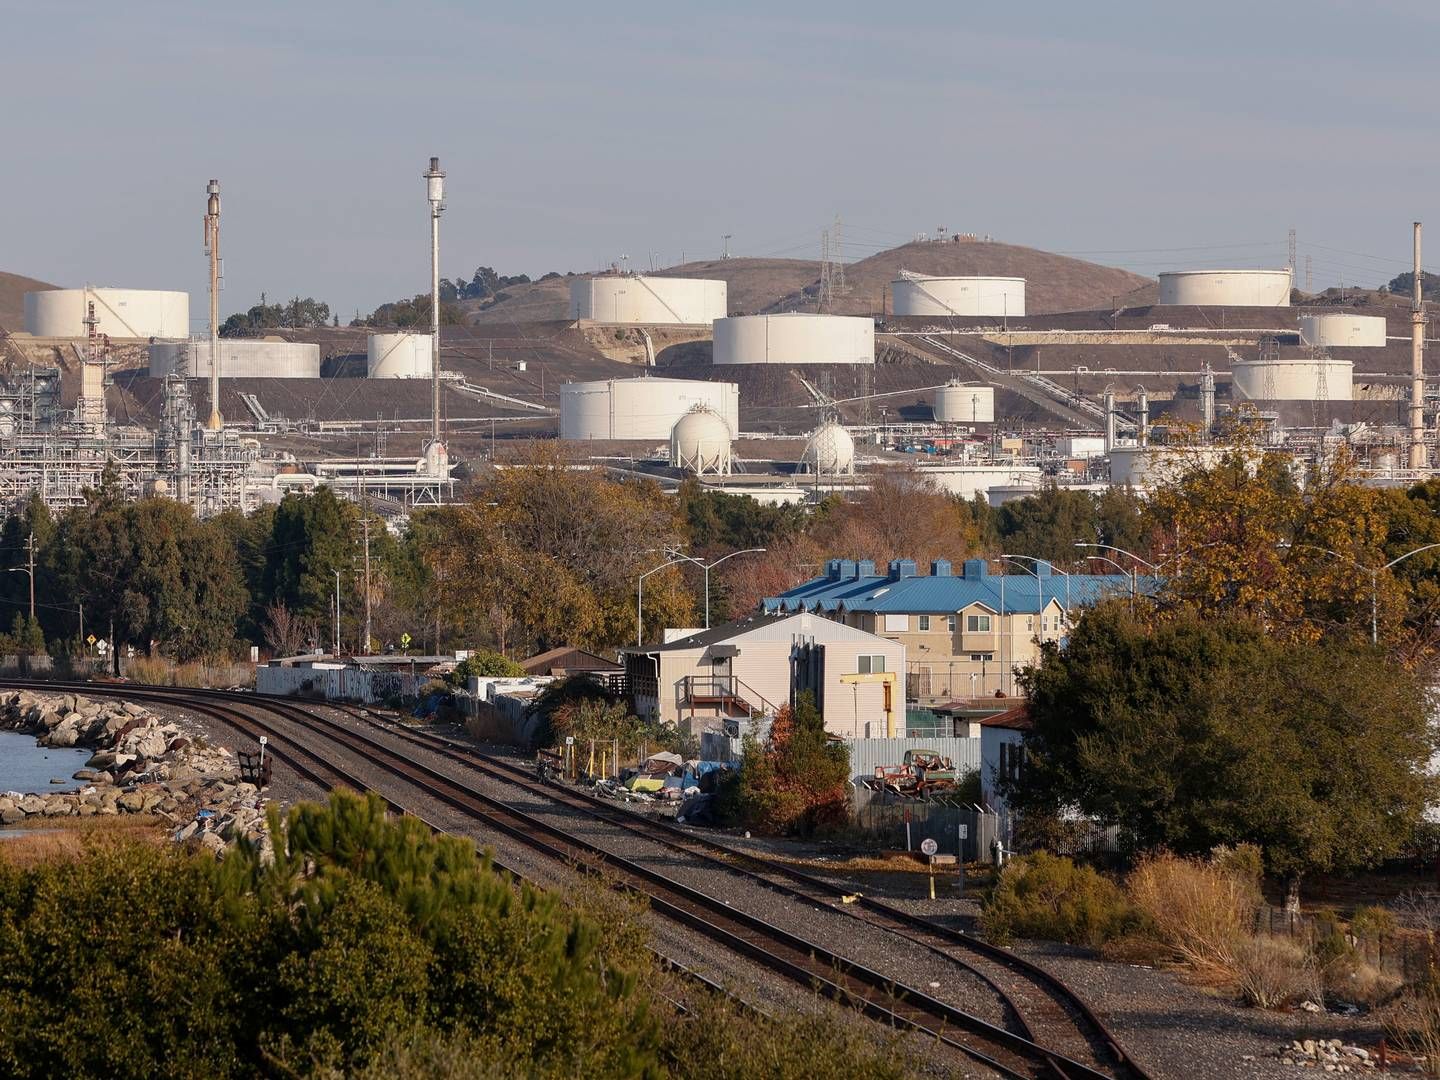 Arkivfoto af olieraffinaderiet Philips 66 i Californien. | Foto: Brittany Hosea-Small/Reuters/Ritzau Scanpix